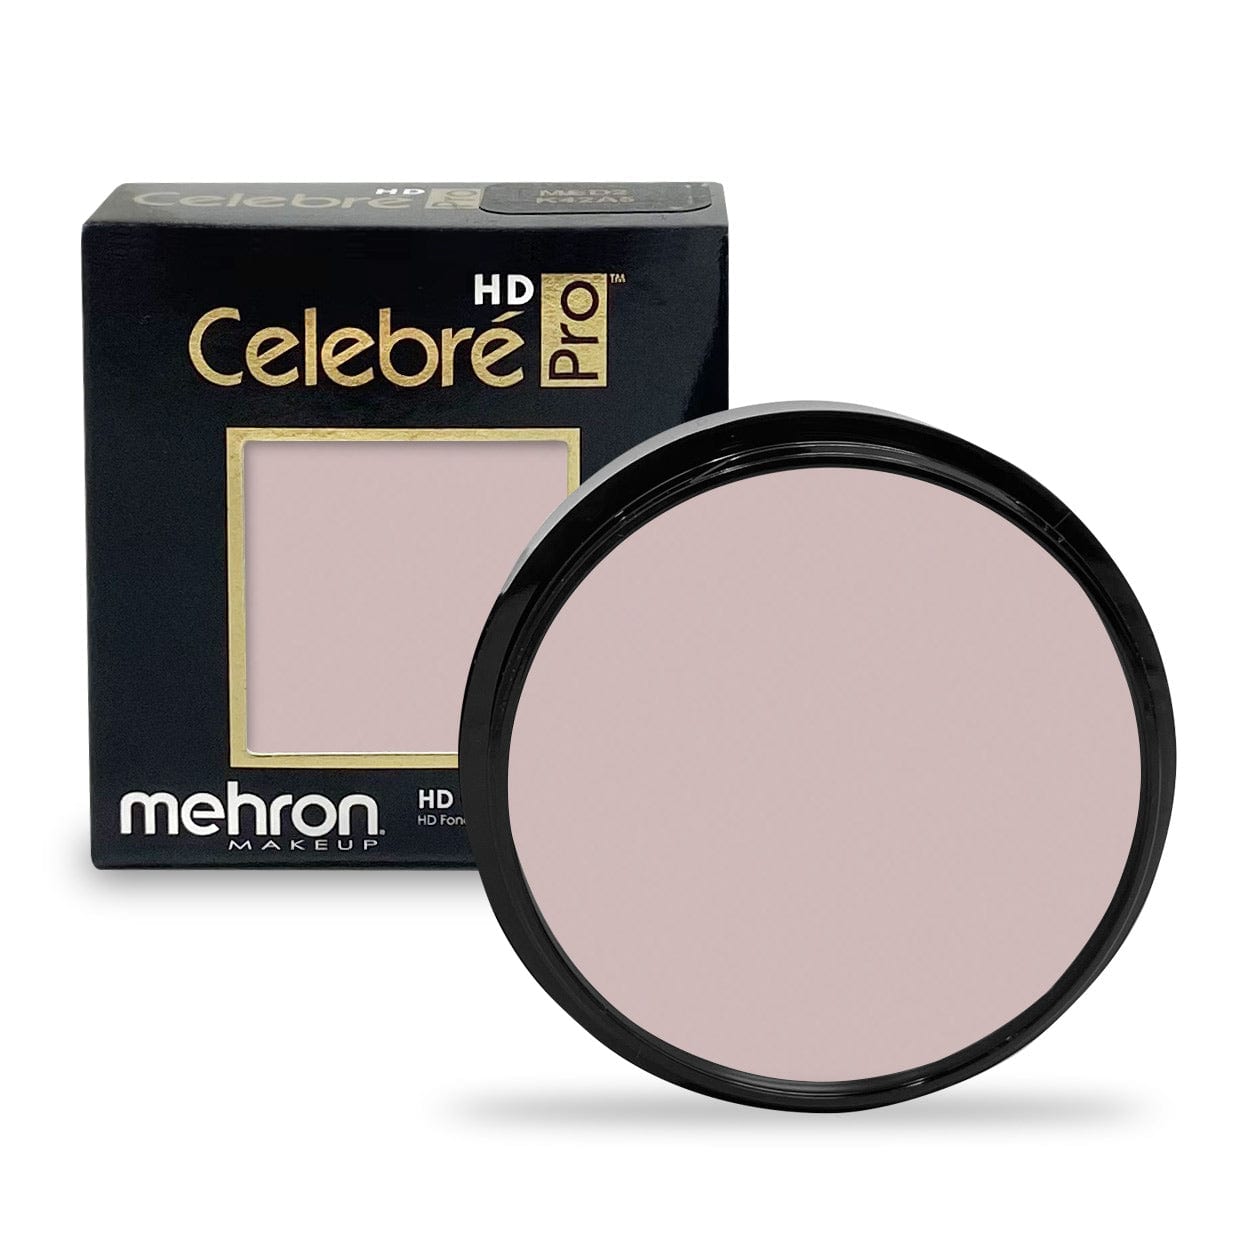 Mehron Celebre Pro HD-Cream 25g - TV2 Ivory Bisque - Mehron